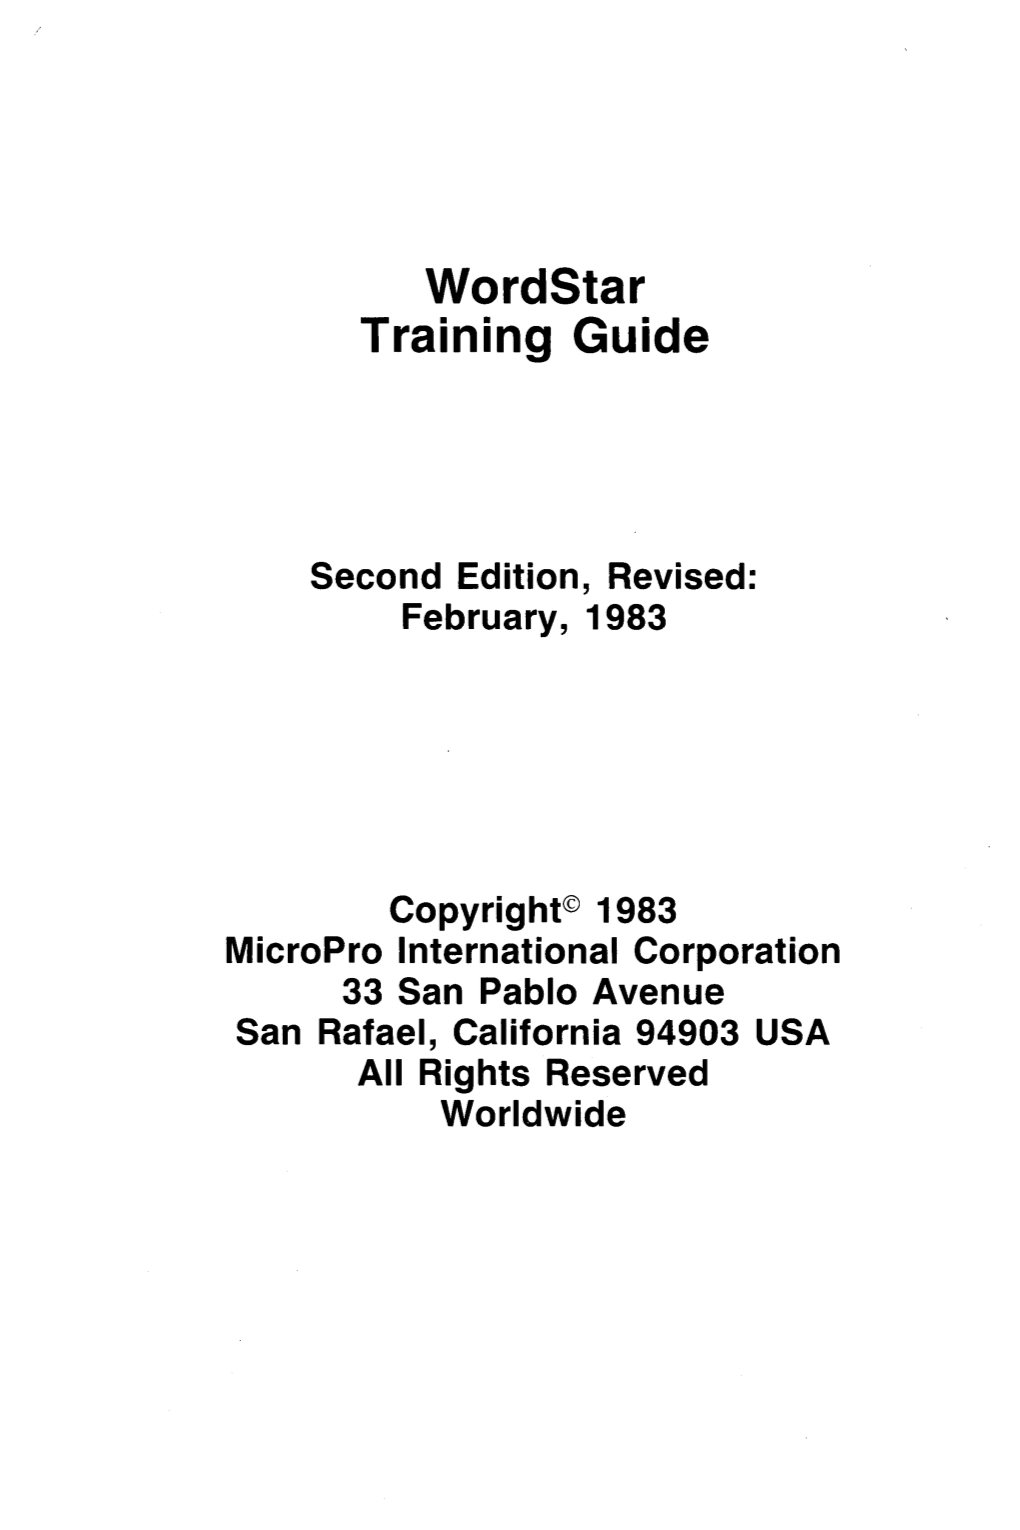 Wordstar Training Guide